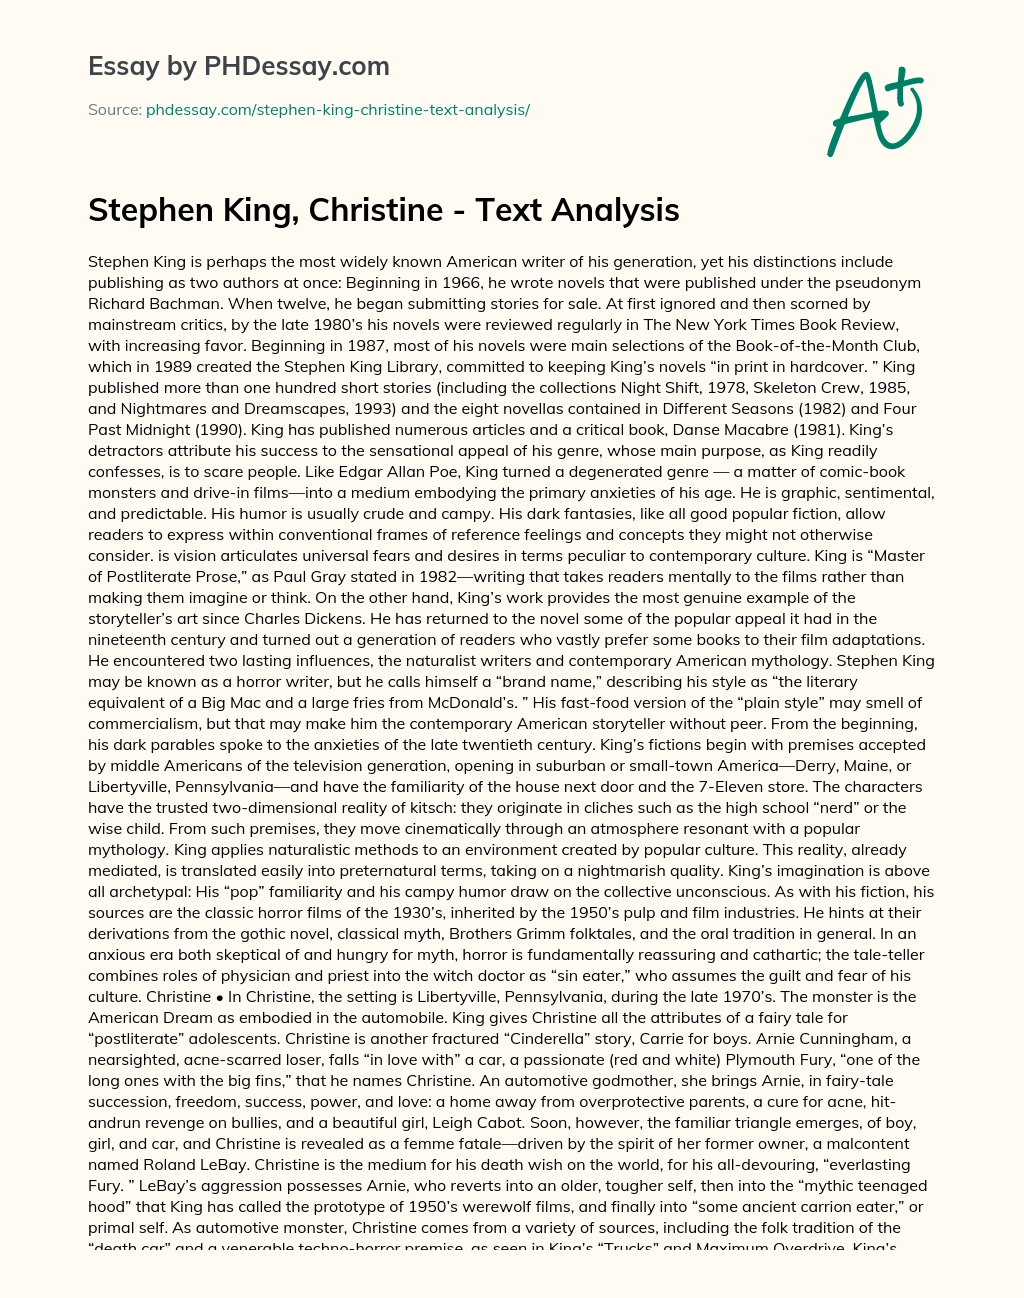 Stephen King, Christine – Text Analysis essay